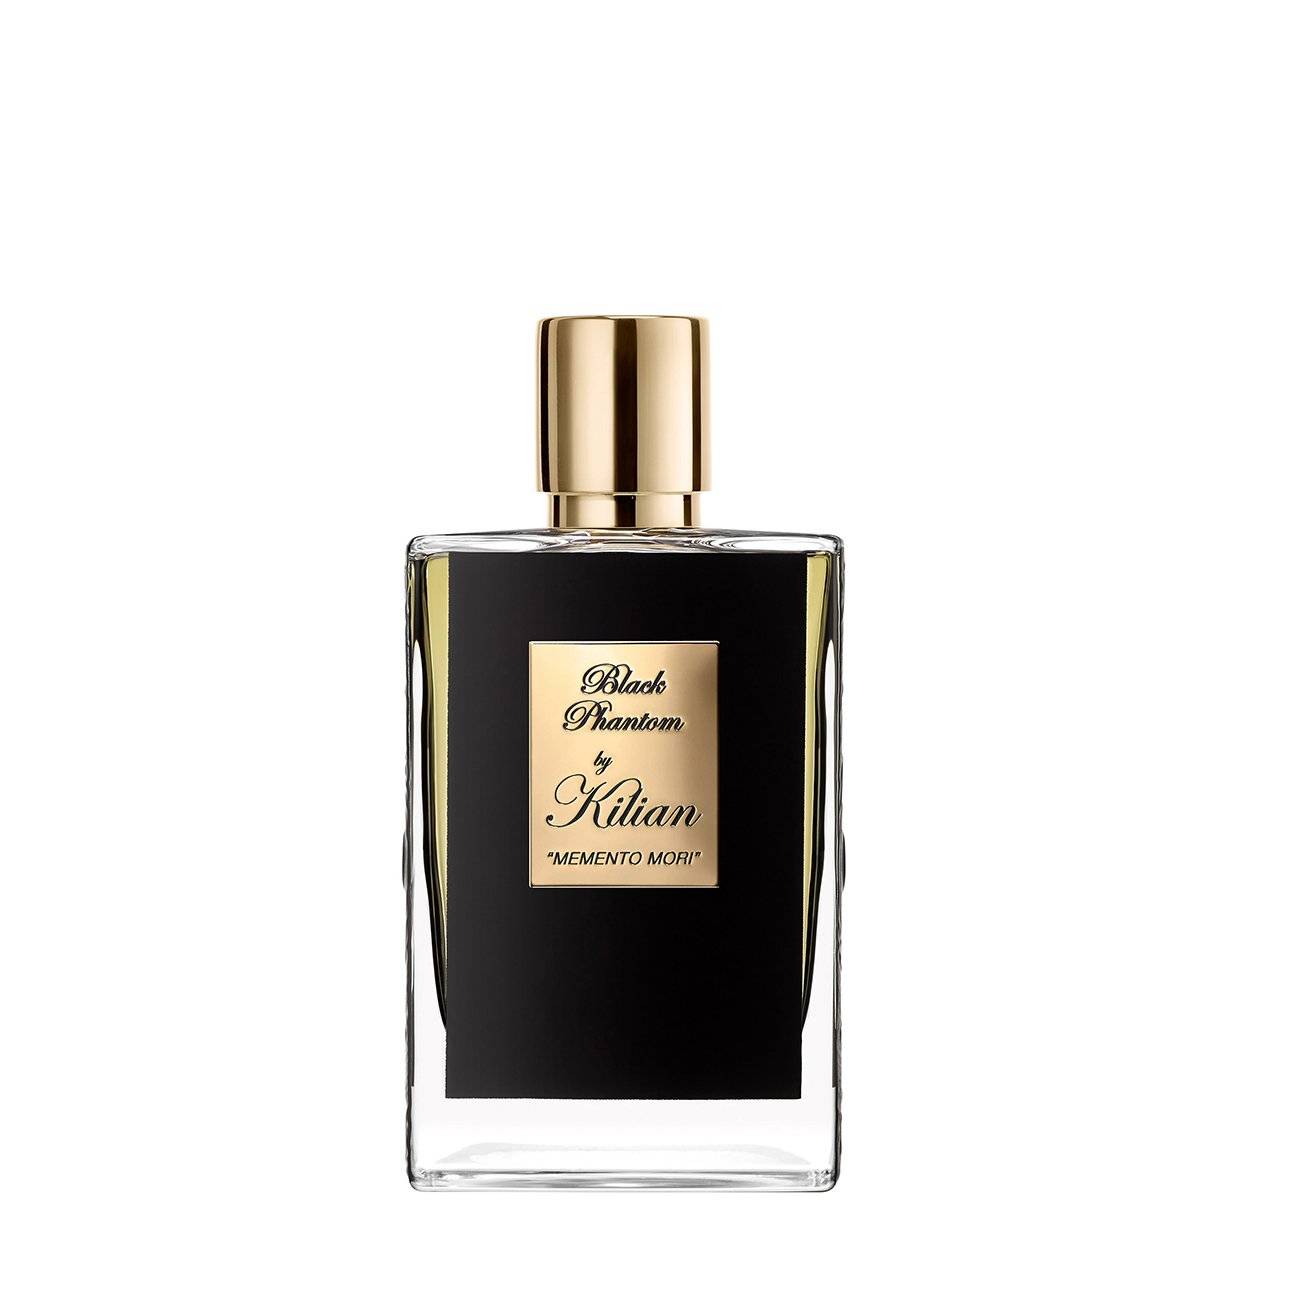 Parfum de niche Kilian BLACK PHANTOM WITH COFFRET 50ml cu comanda online